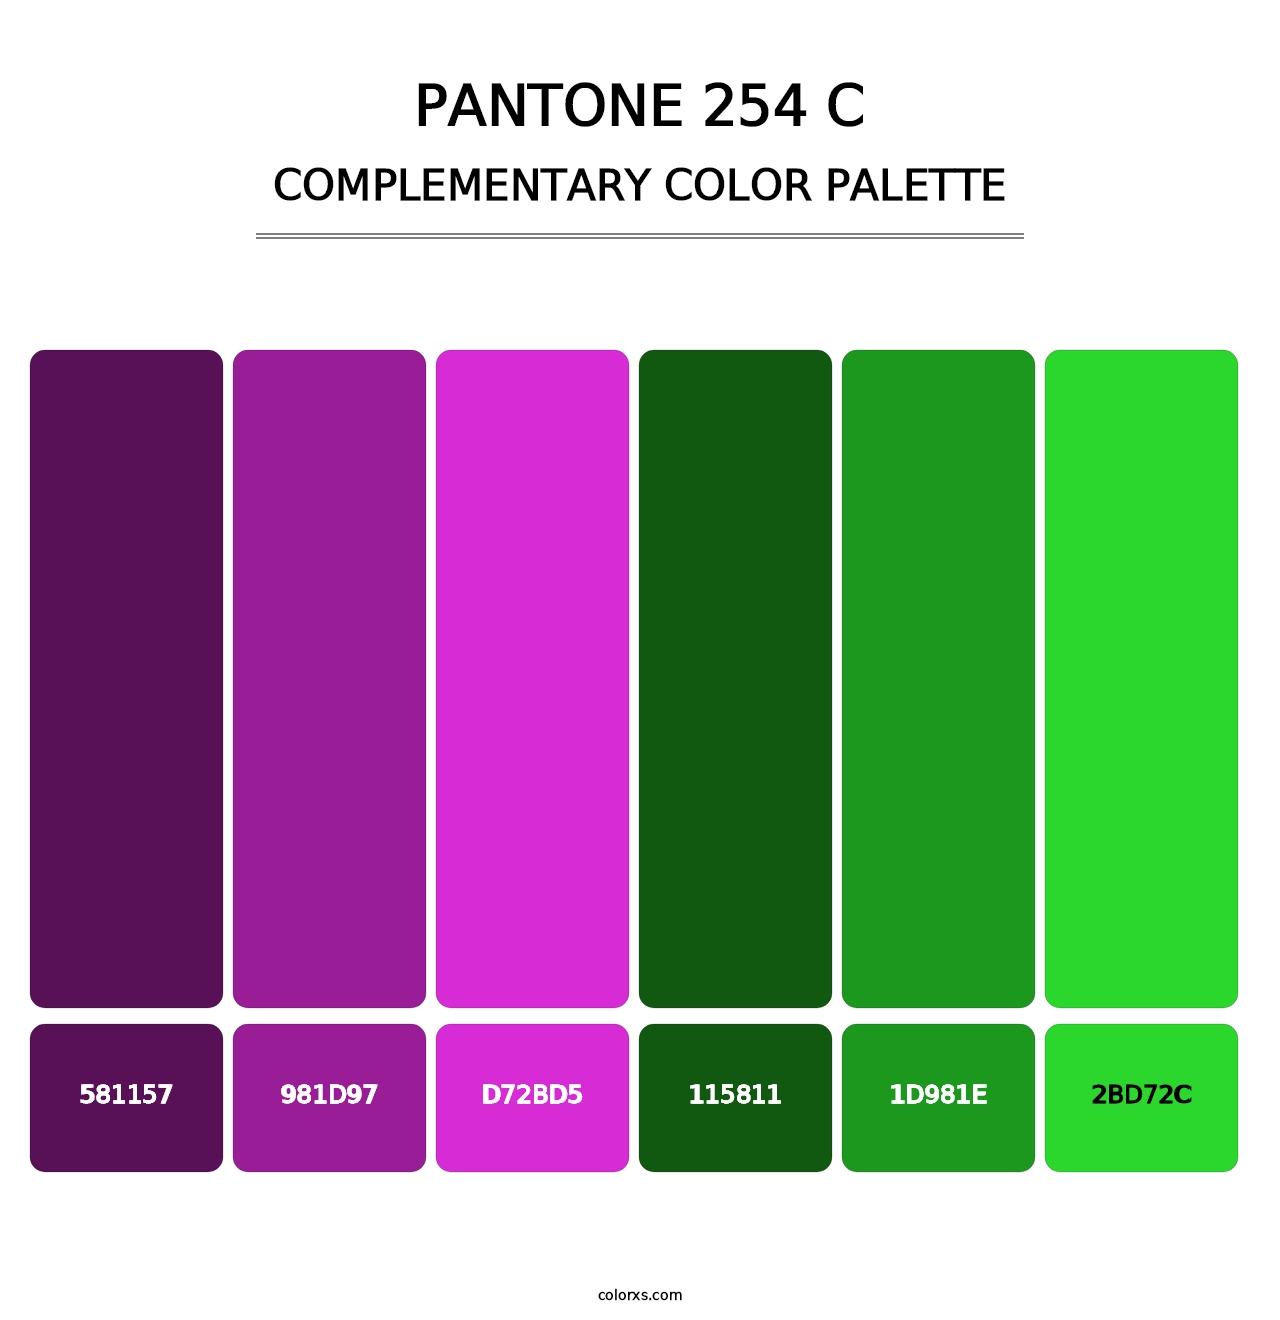 PANTONE 254 C - Complementary Color Palette